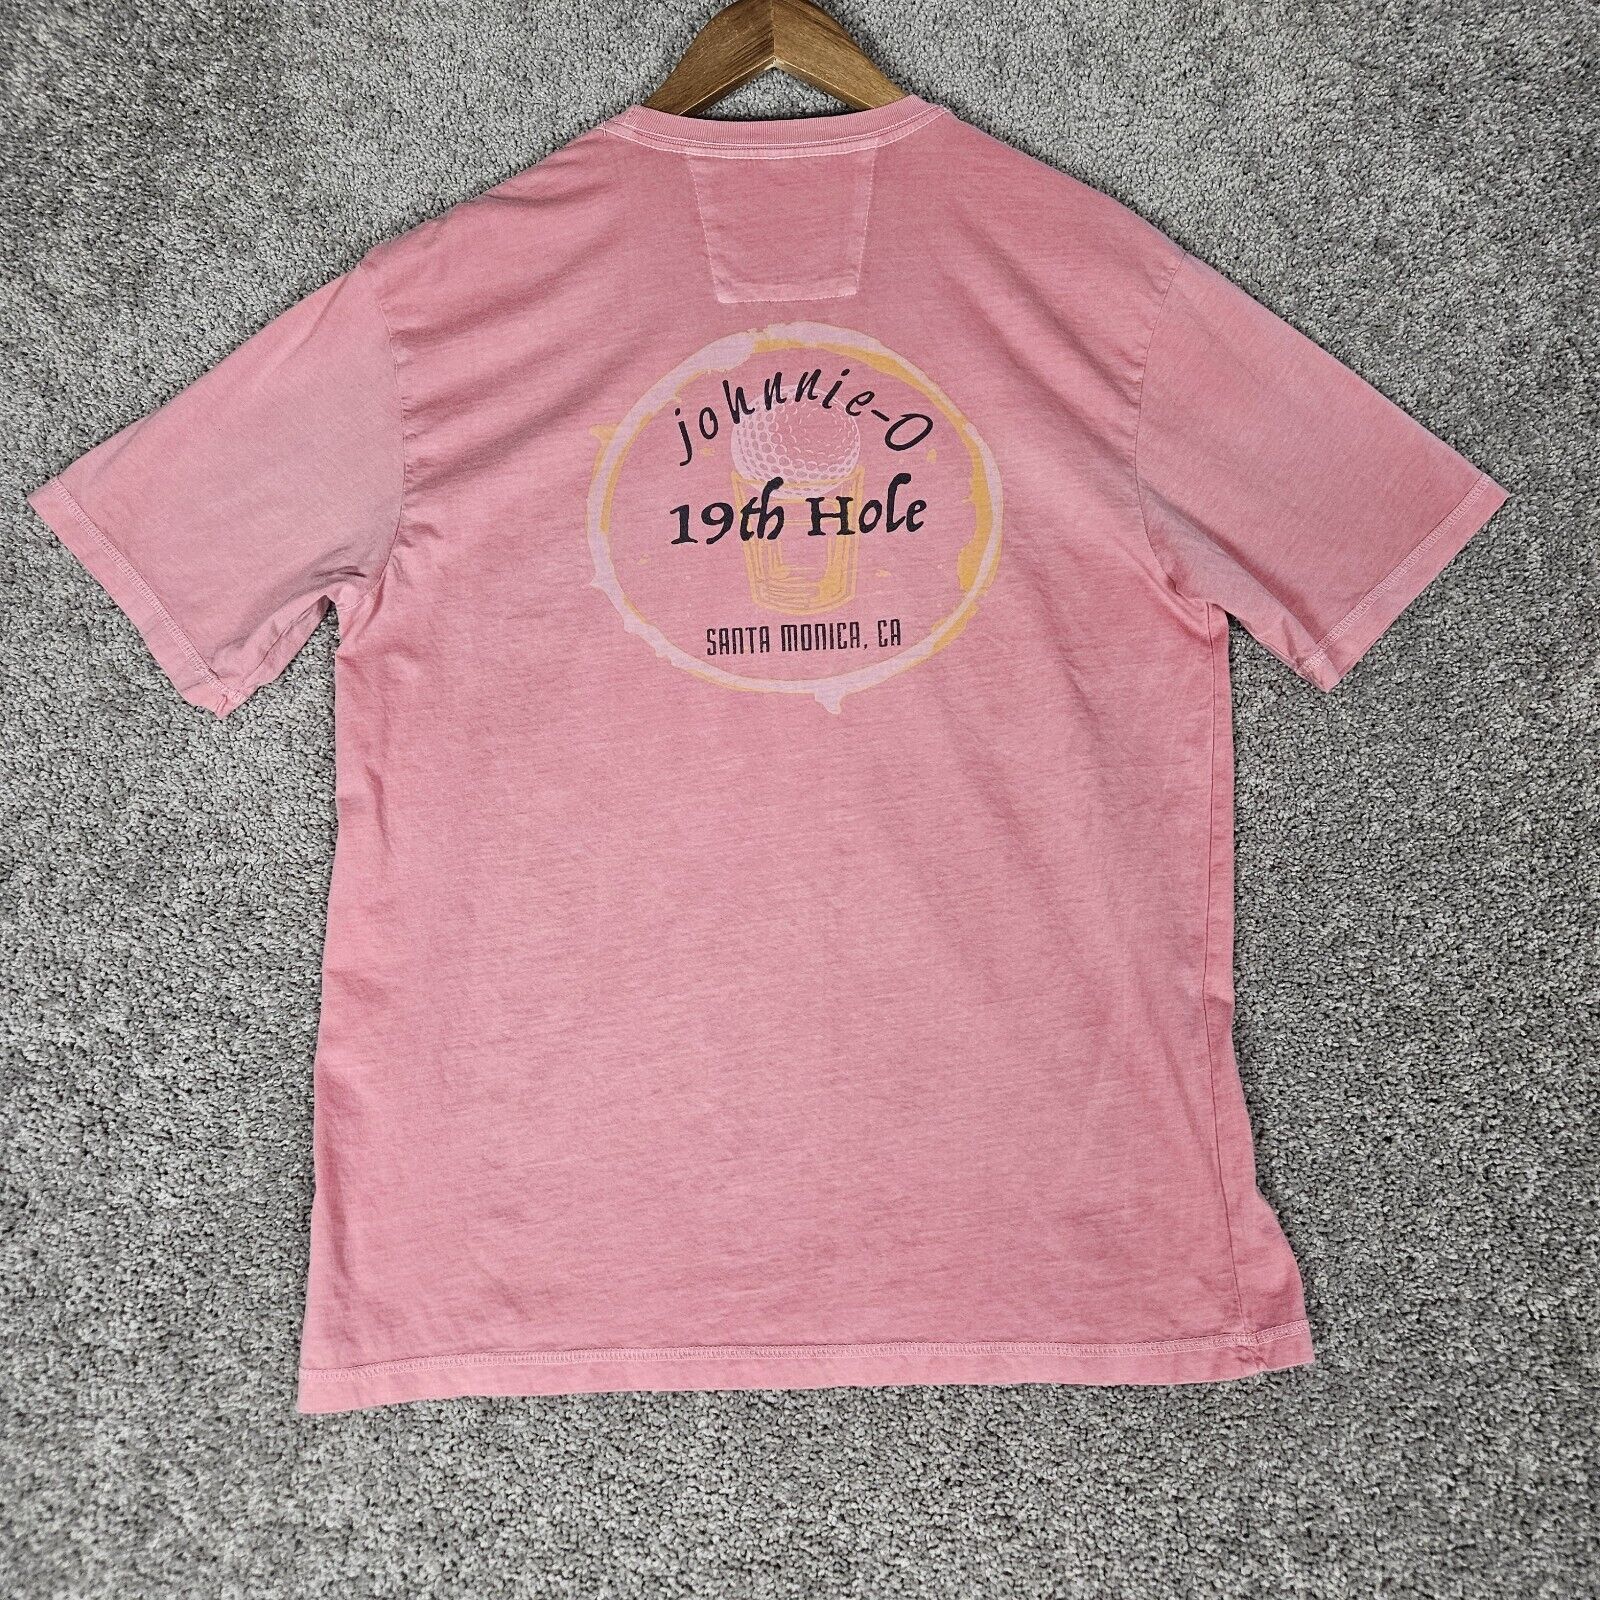 Johnnie-O Shirt Mens Large Pink T-Shirt Golf 19th Holes Santa Monica California 